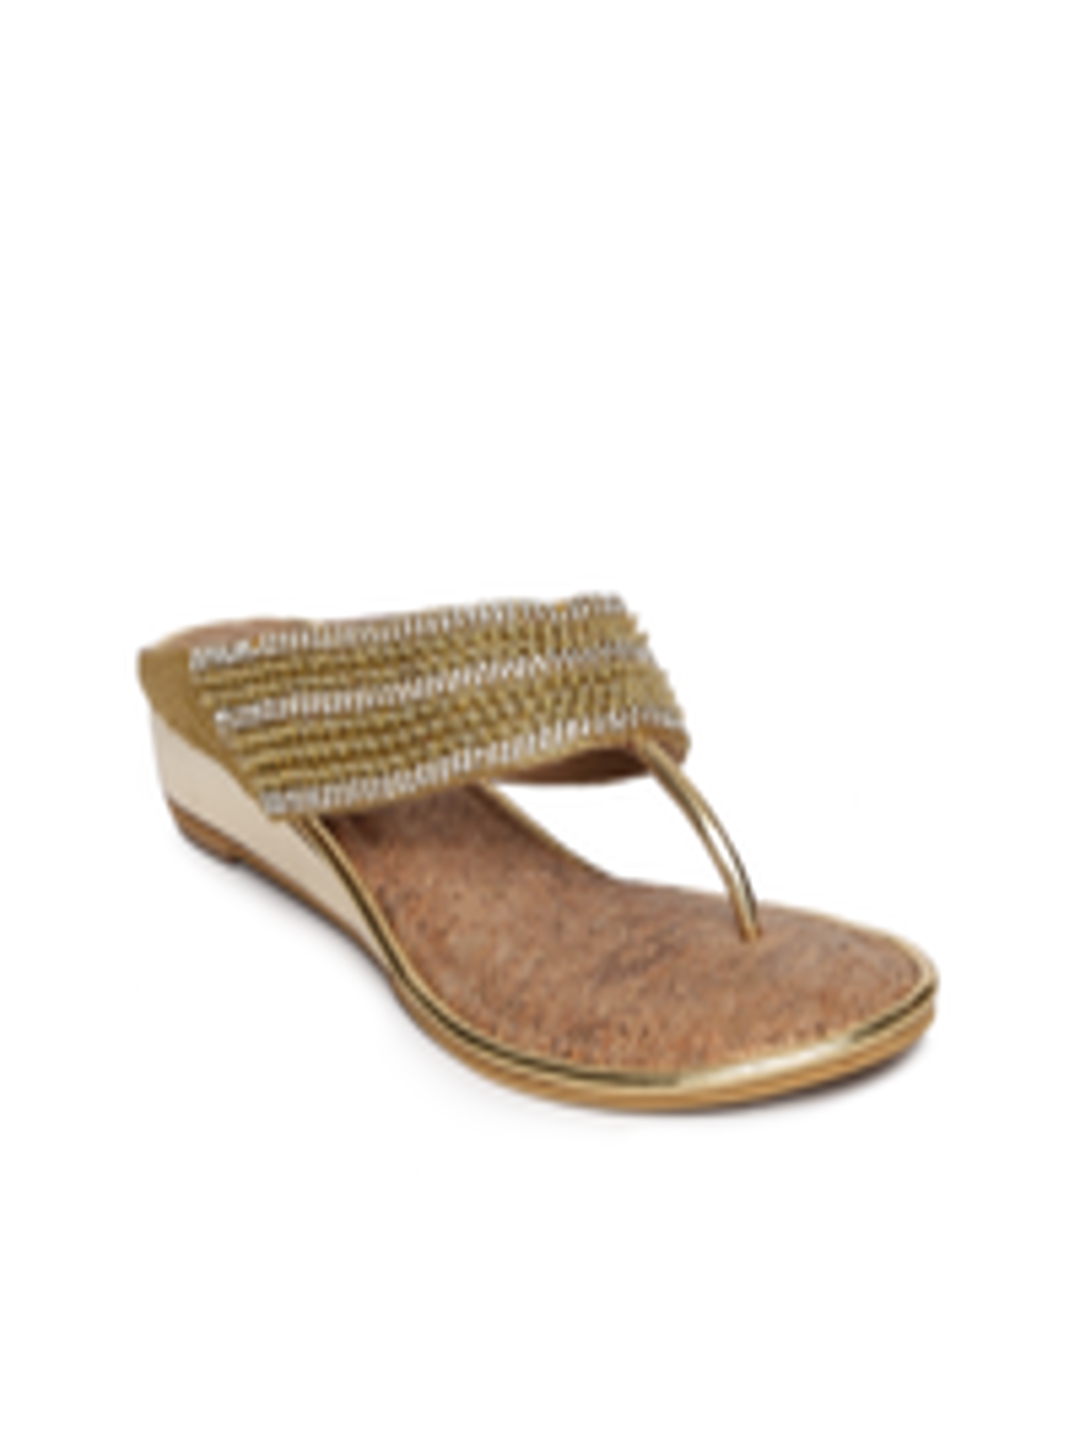 Buy Inc 5 Women Gold Toned Embellished Wedges - Heels for Women 2149250 ...